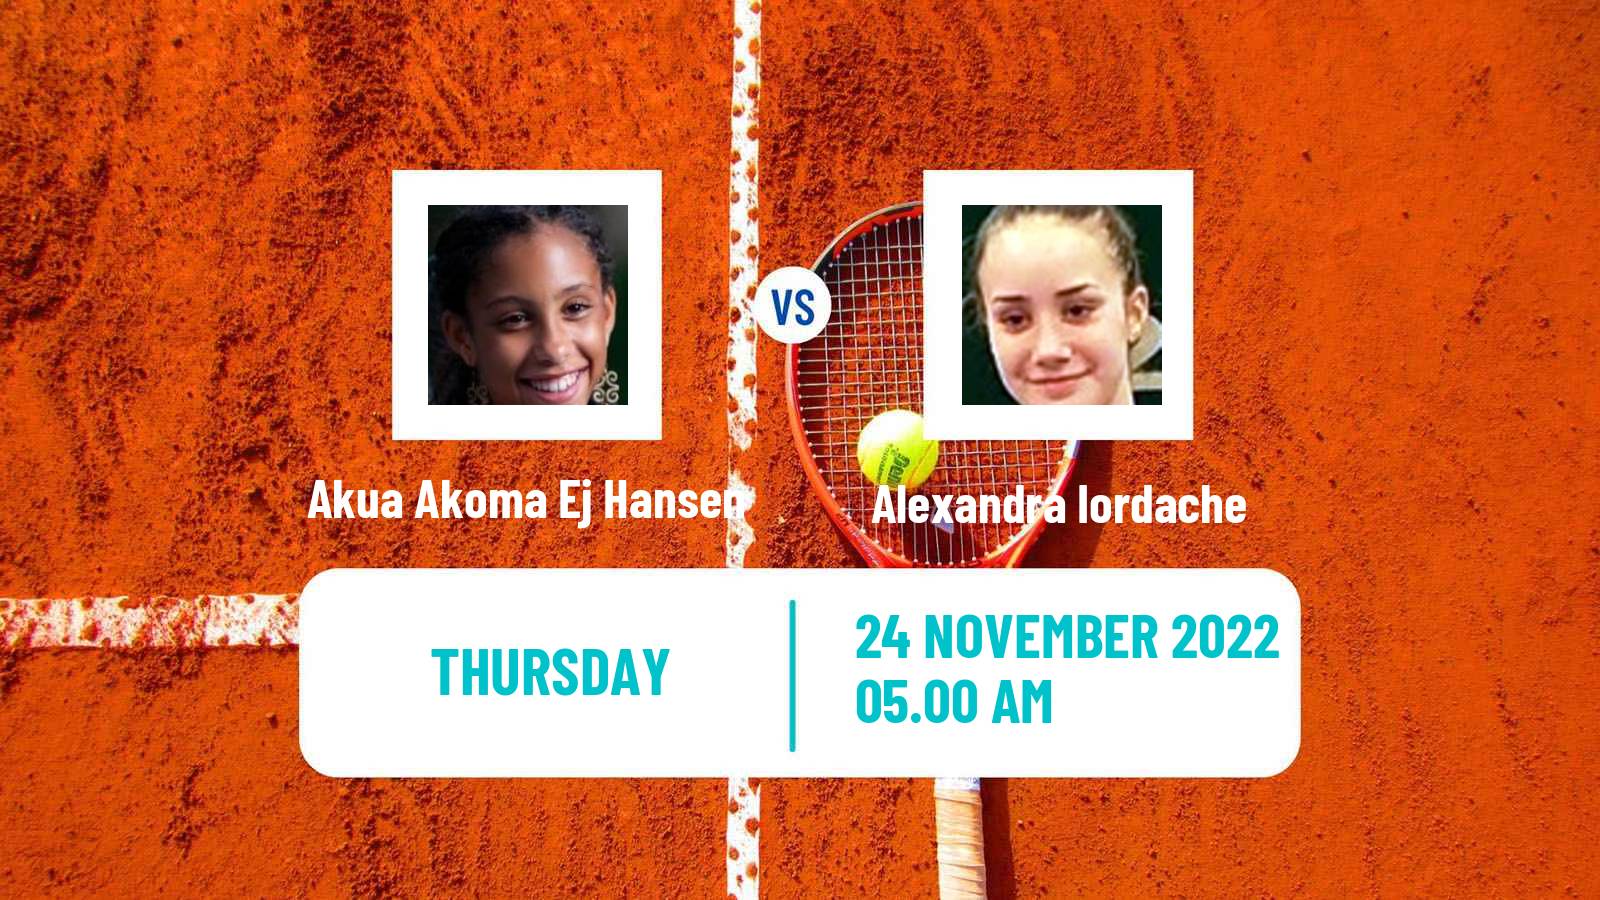 Tennis ITF Tournaments Akua Akoma Ej Hansen - Alexandra Iordache